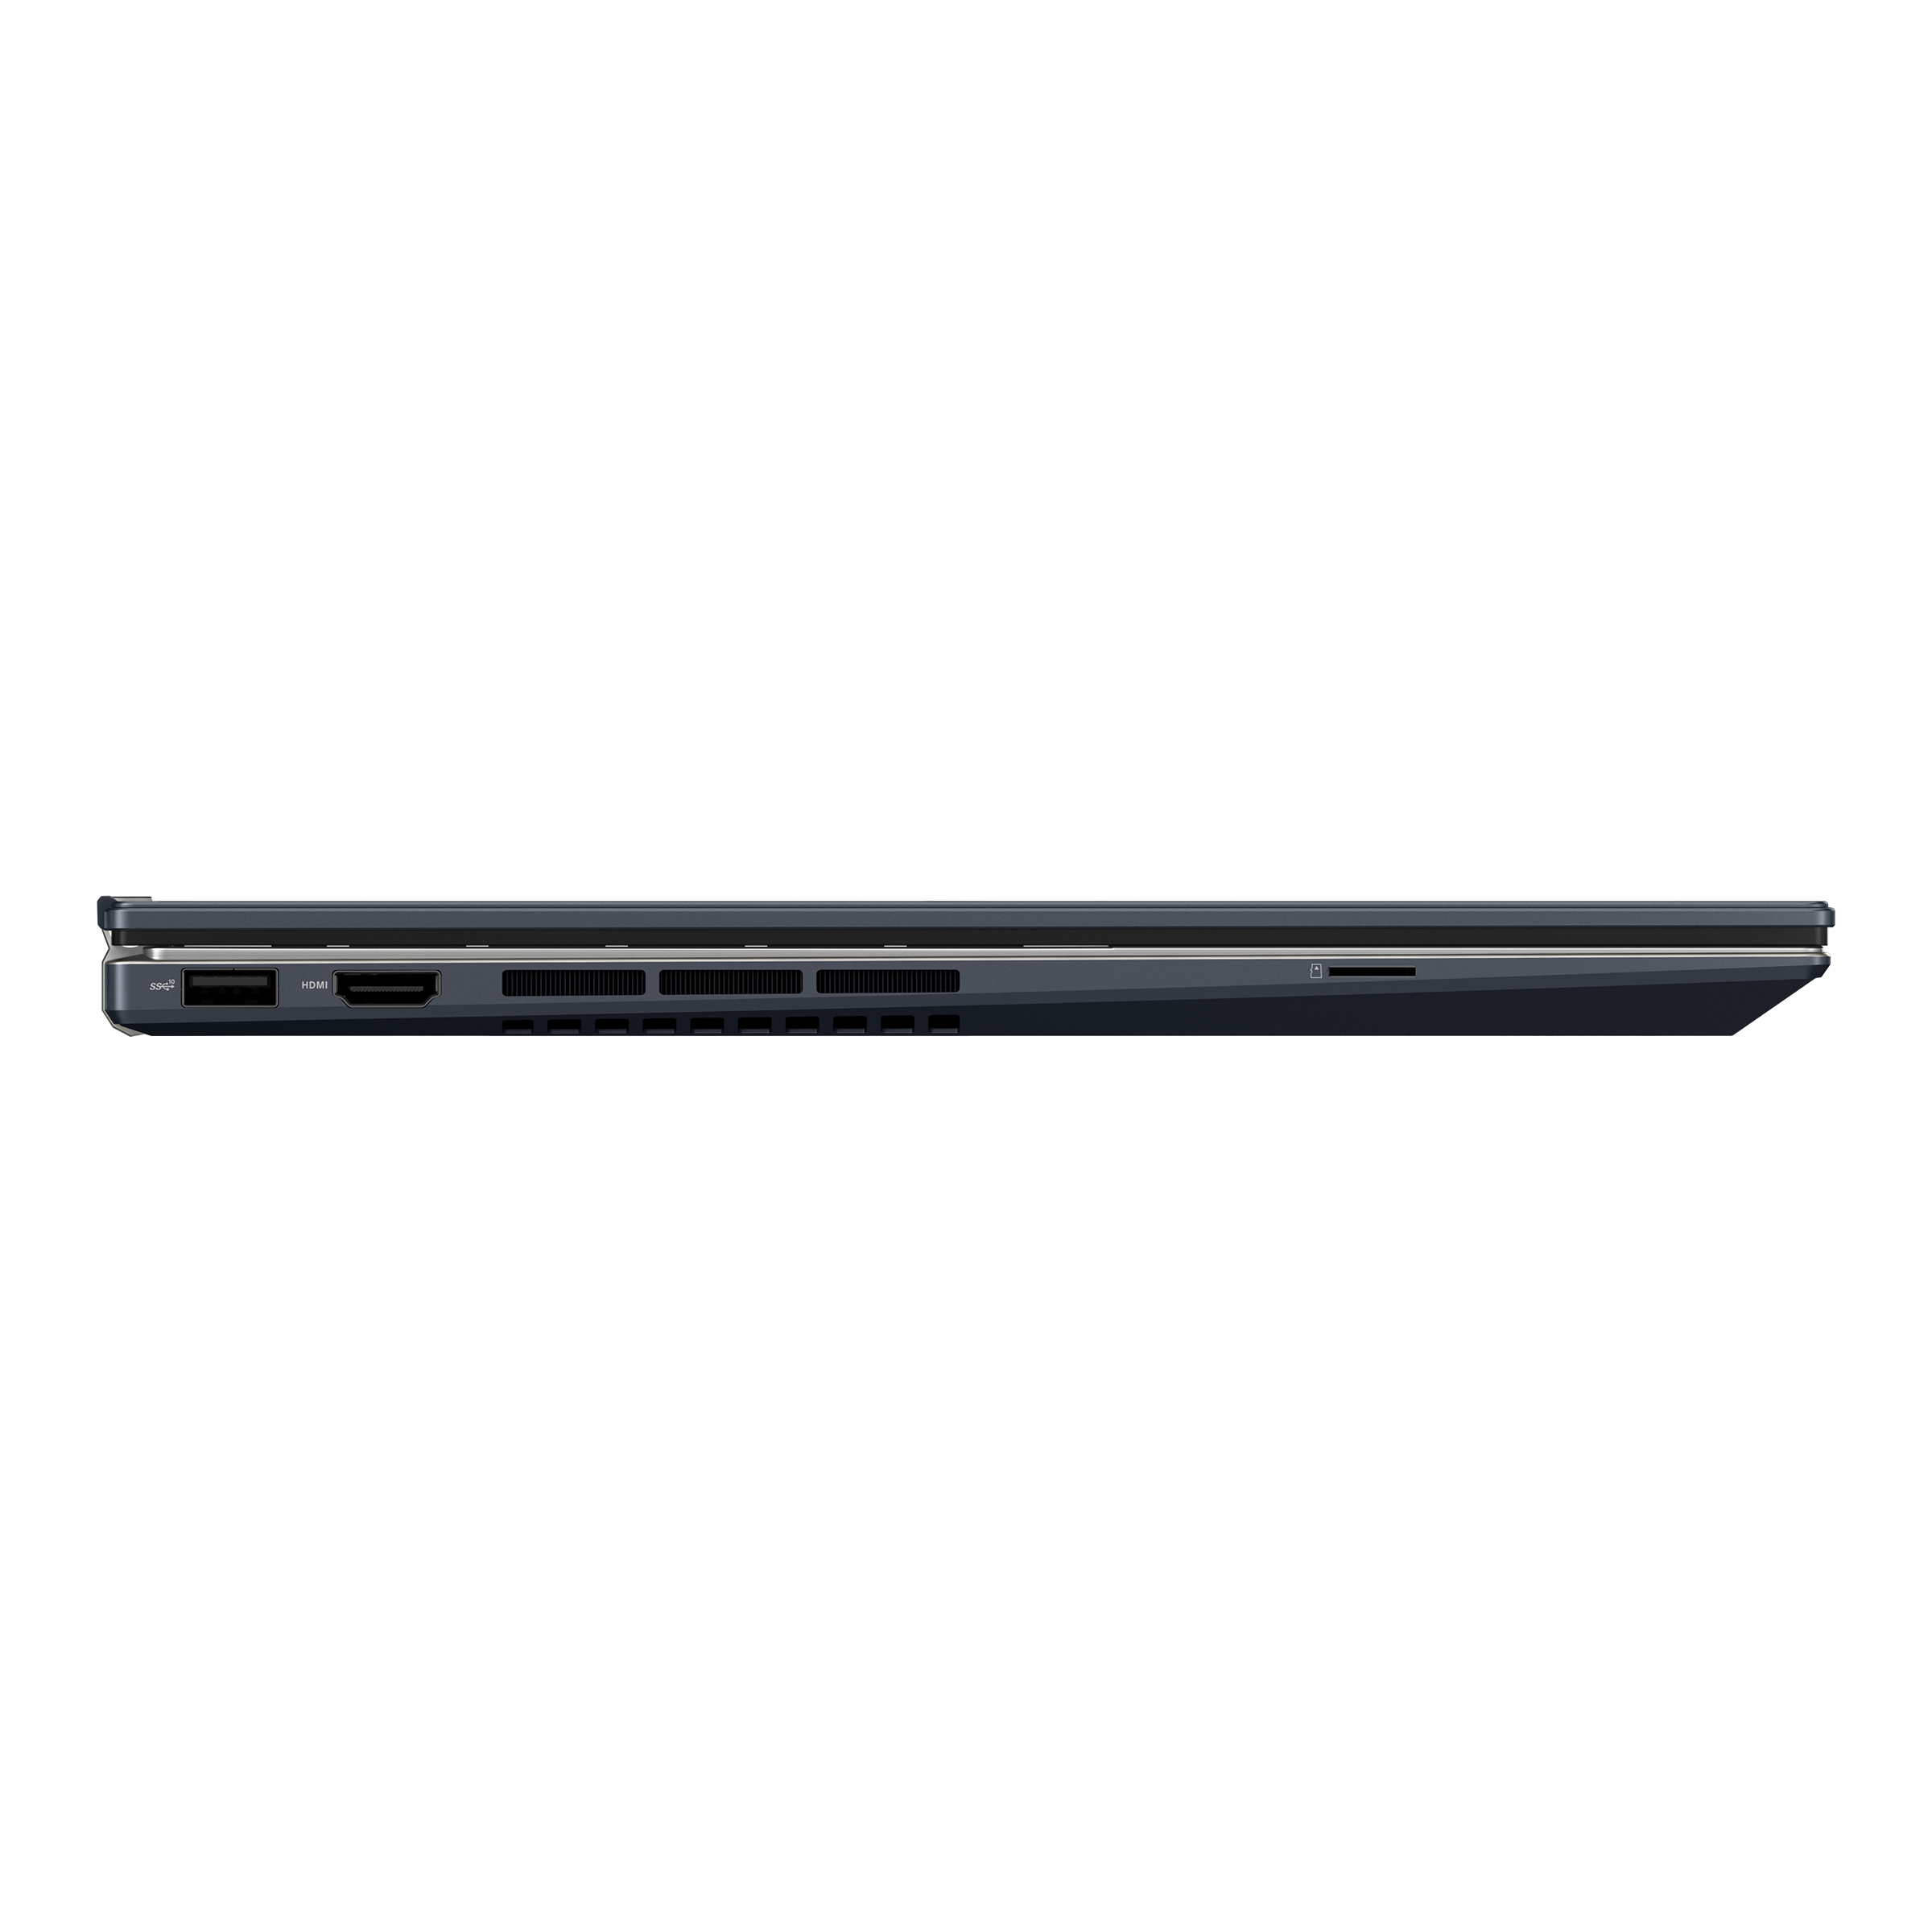 Zenbook Pro 15 Flip OLED ( UP6502, 12th Gen Intel)｜노트북 크리에이터용｜ASUS 한국